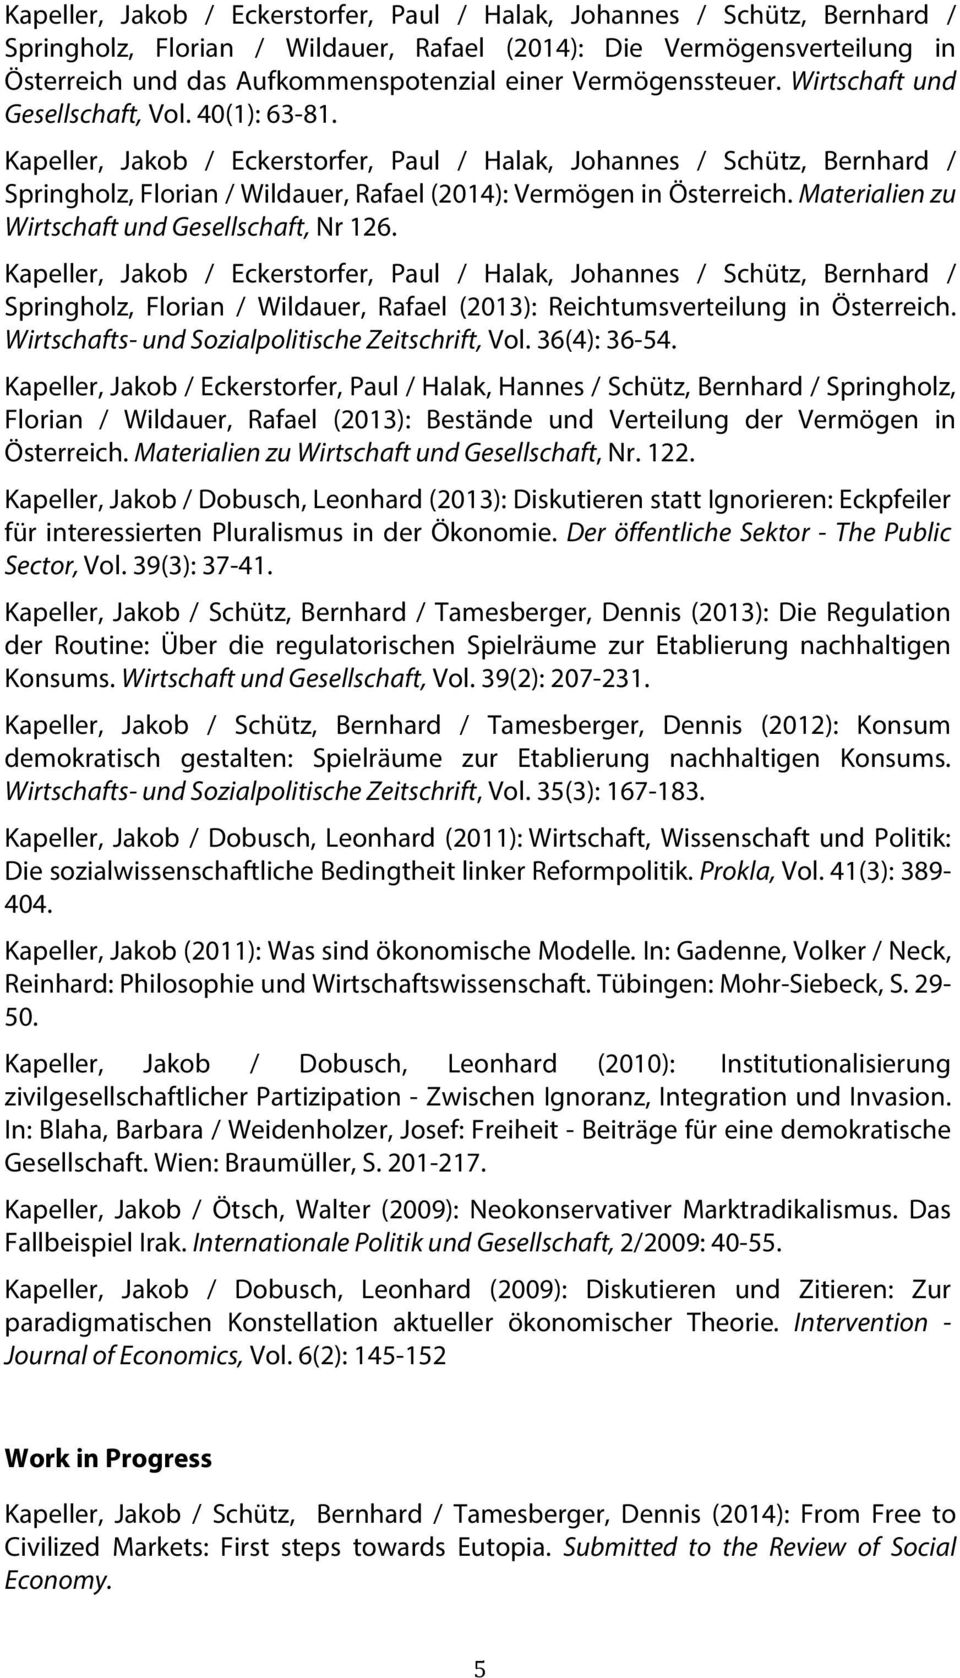 Kapeller, Jakob / Eckerstorfer, Paul / Halak, Johannes / Schütz, Bernhard / Springholz, Florian / Wildauer, Rafael (2014): Vermögen in Österreich. Materialien zu Wirtschaft und Gesellschaft, Nr 126.